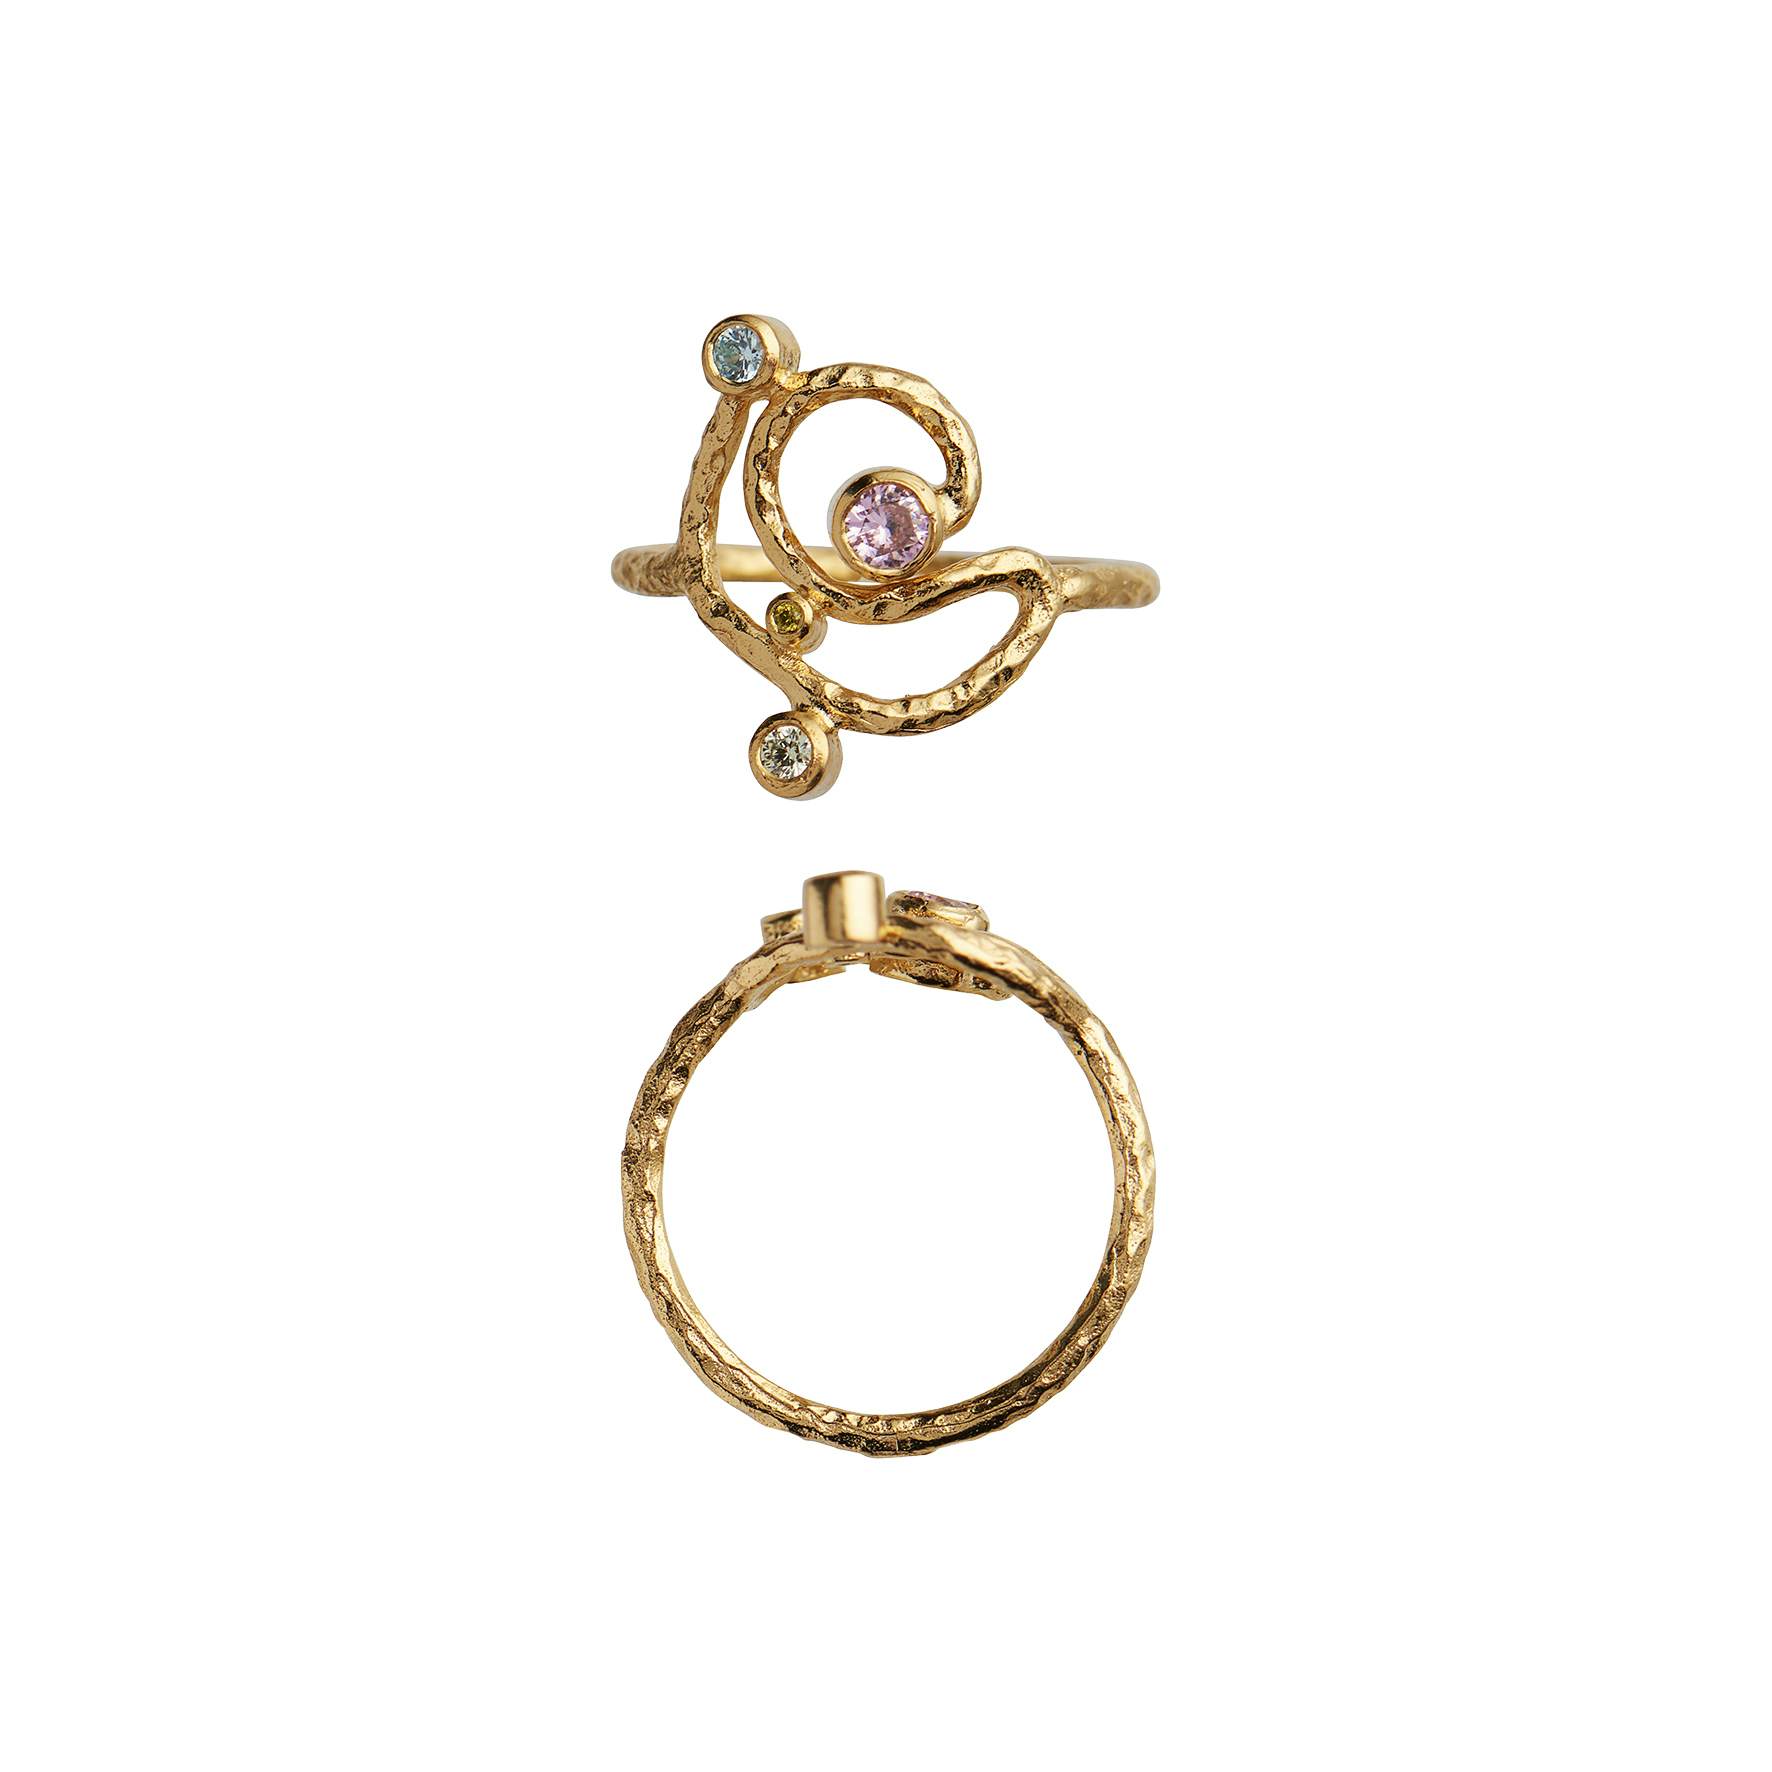 Twirly Candy Dots Ring von STINE A Jewelry in Vergoldet-Silber Sterling 925